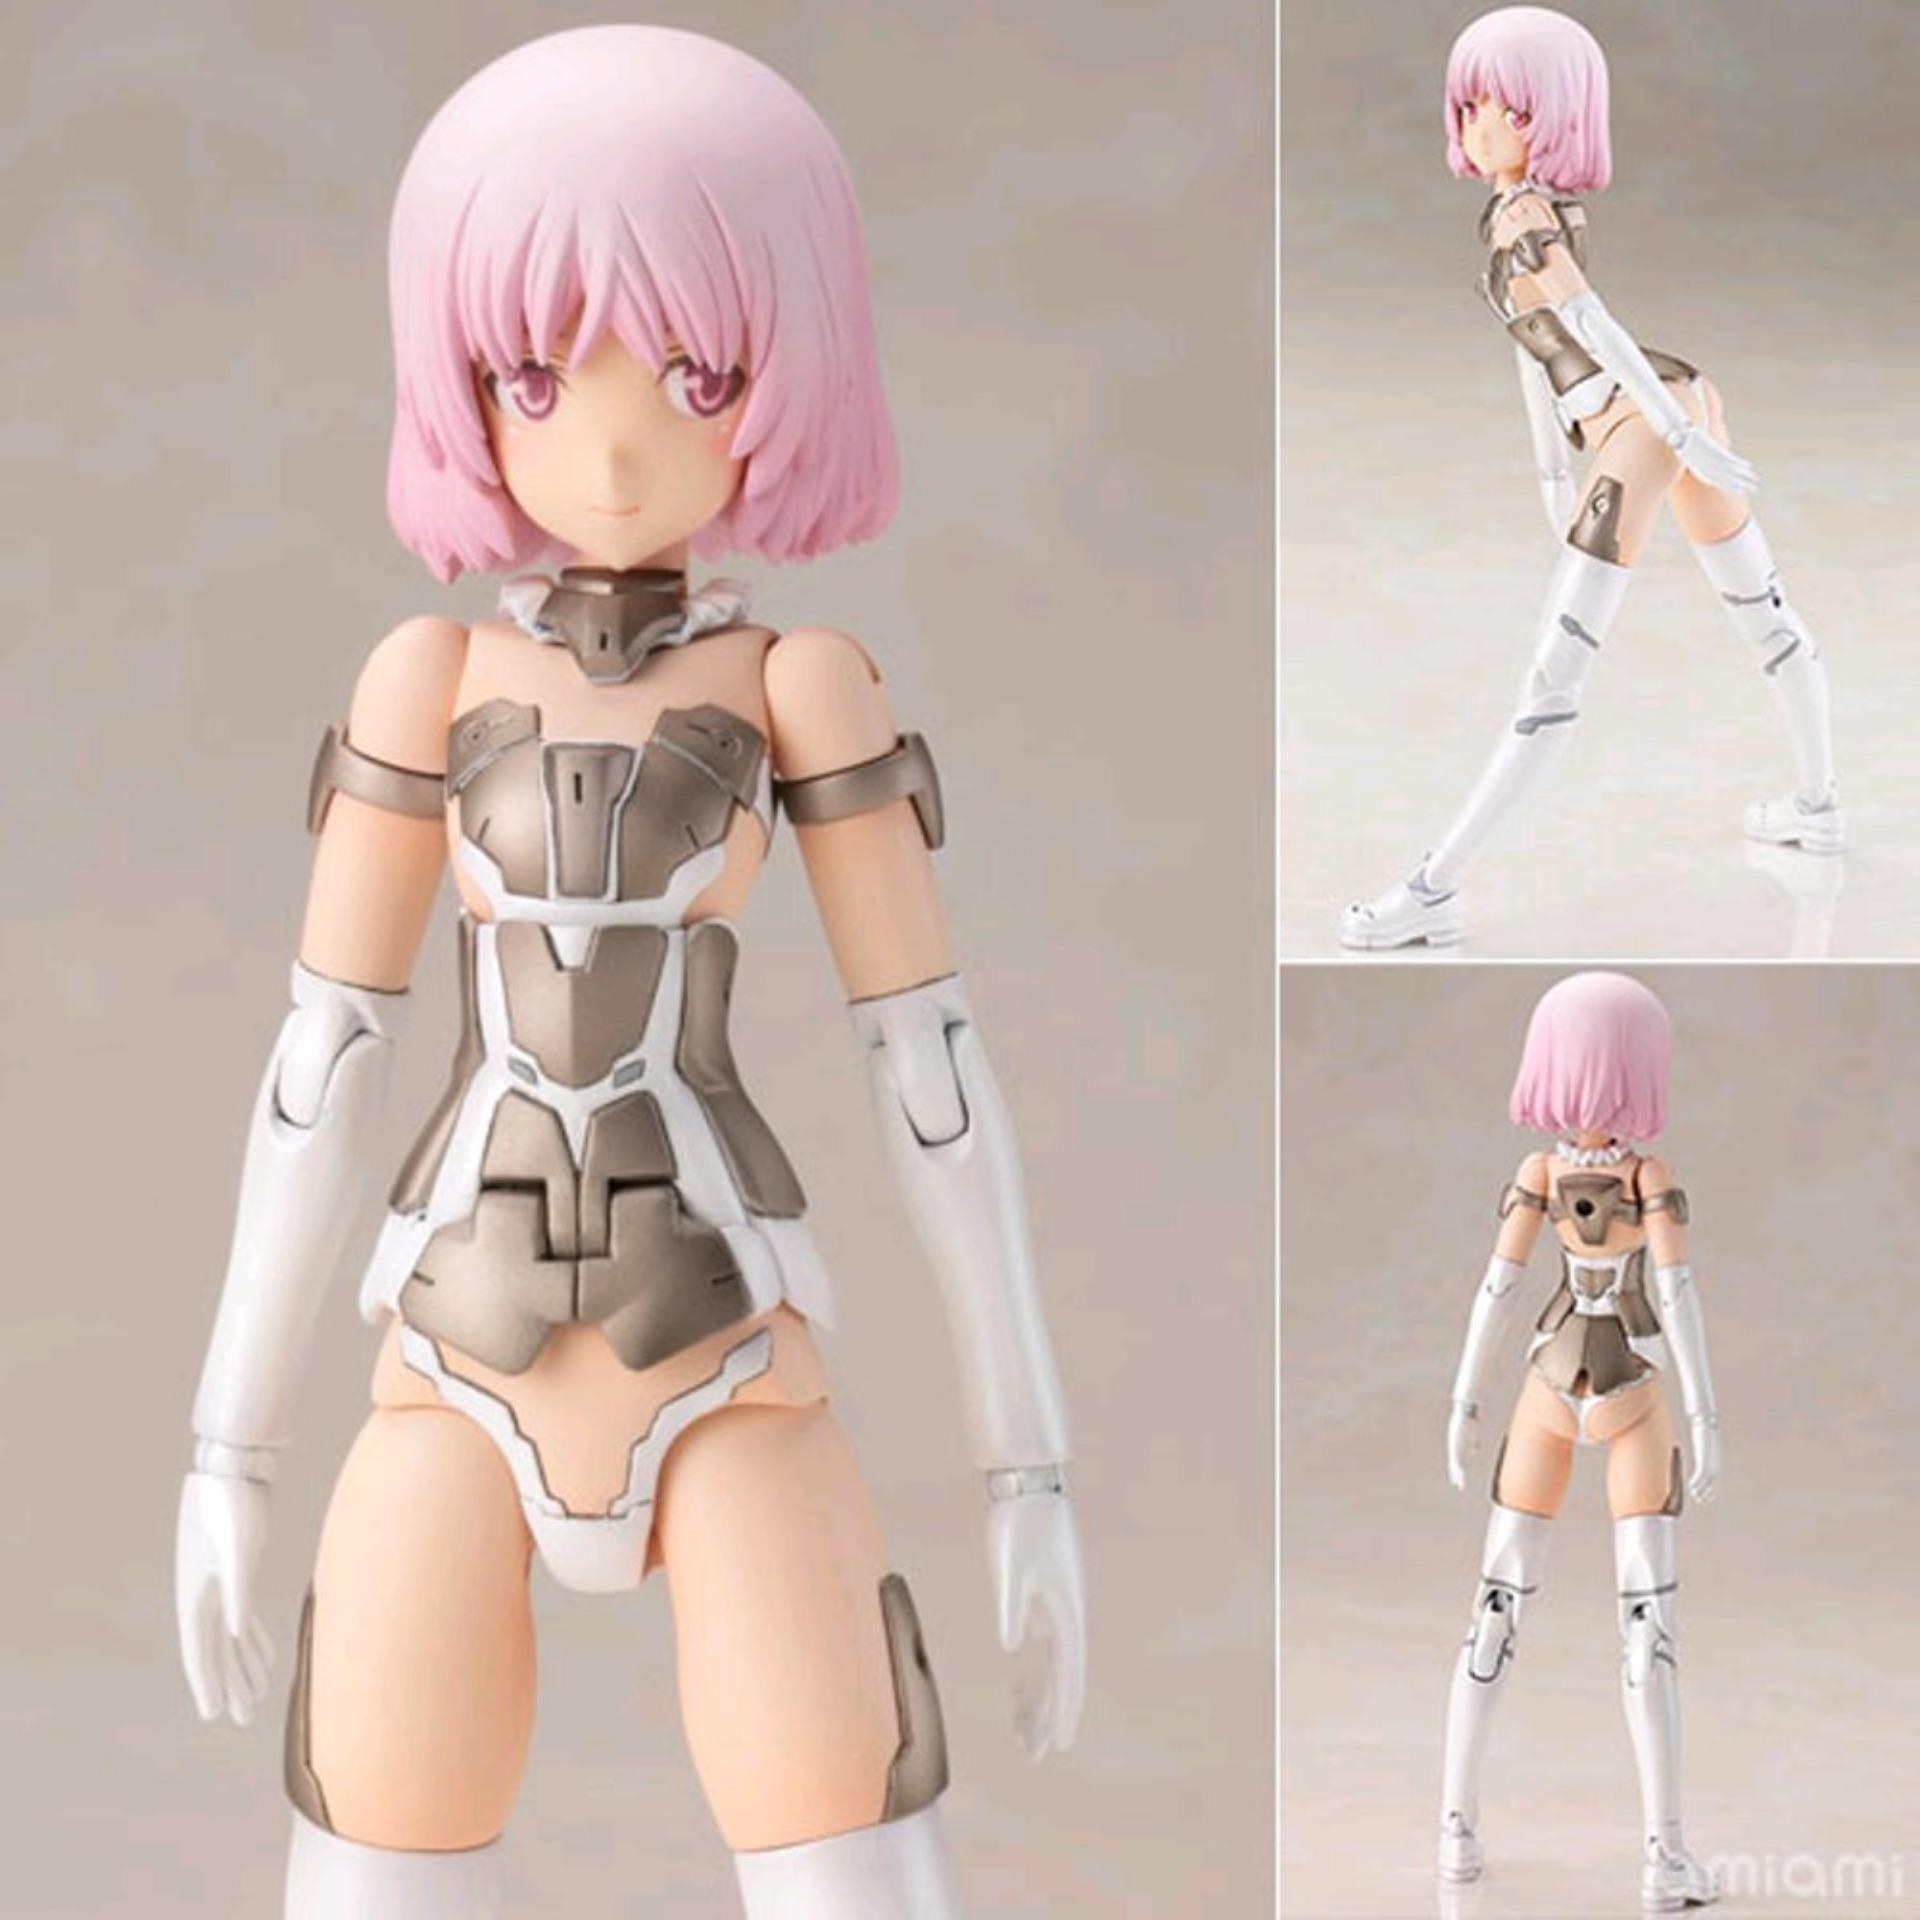 Model โมเดล งานแท้ 100% Frame Arms Girl Materia White FG009 Kotobukiya Ver Figma ฟิกม่า Anime ขยับแขน-ขาได้ ของขวัญ Gift ของสะสมหายาก อนิเมะ การ์ตูน มังงะ Doll ตุ๊กตา สั่งและนำเข้าจากญี่ปุ่น manga Figure ฟิกเกอร์